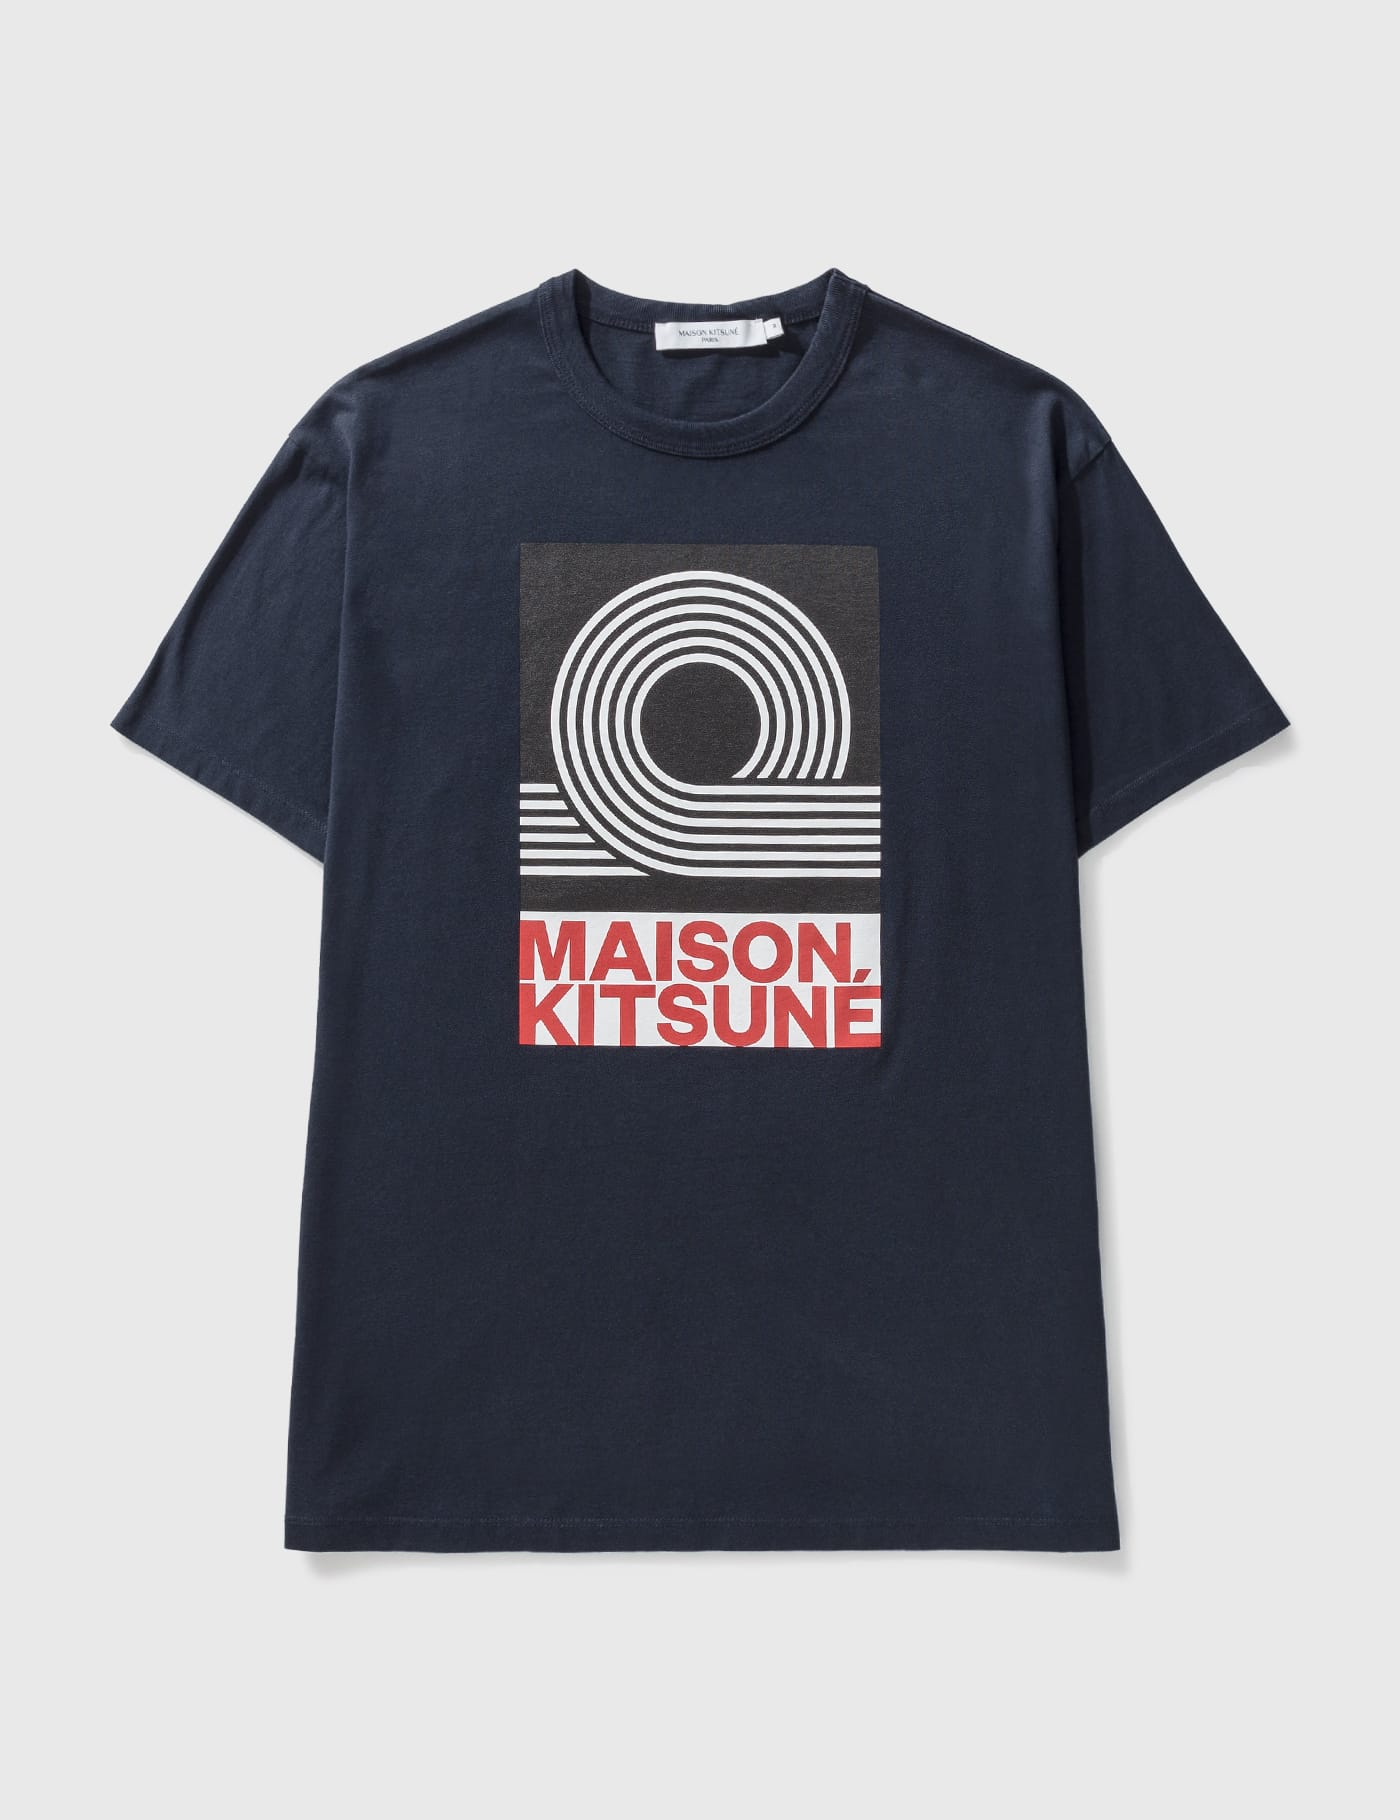 Maison Kitsune - Black Anthony Burrill Classic T-shirt | HBX 